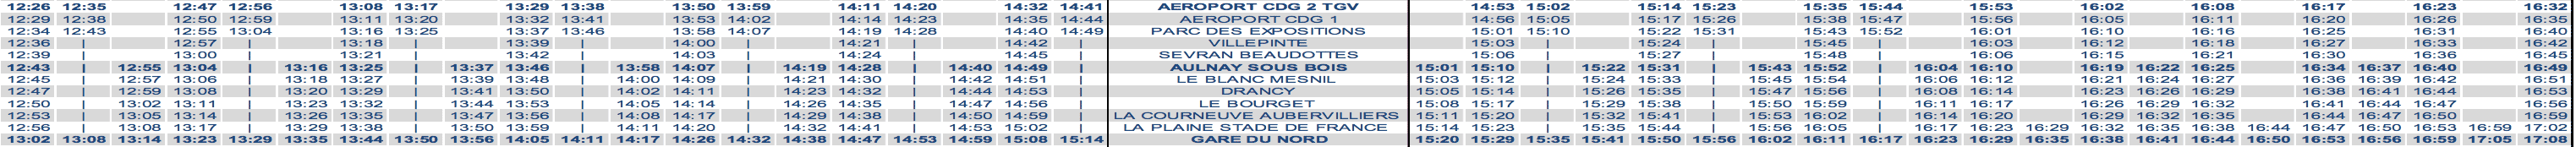 RER B Train Timetable CDG to Paris Afternoon Weekday 2020 Strike